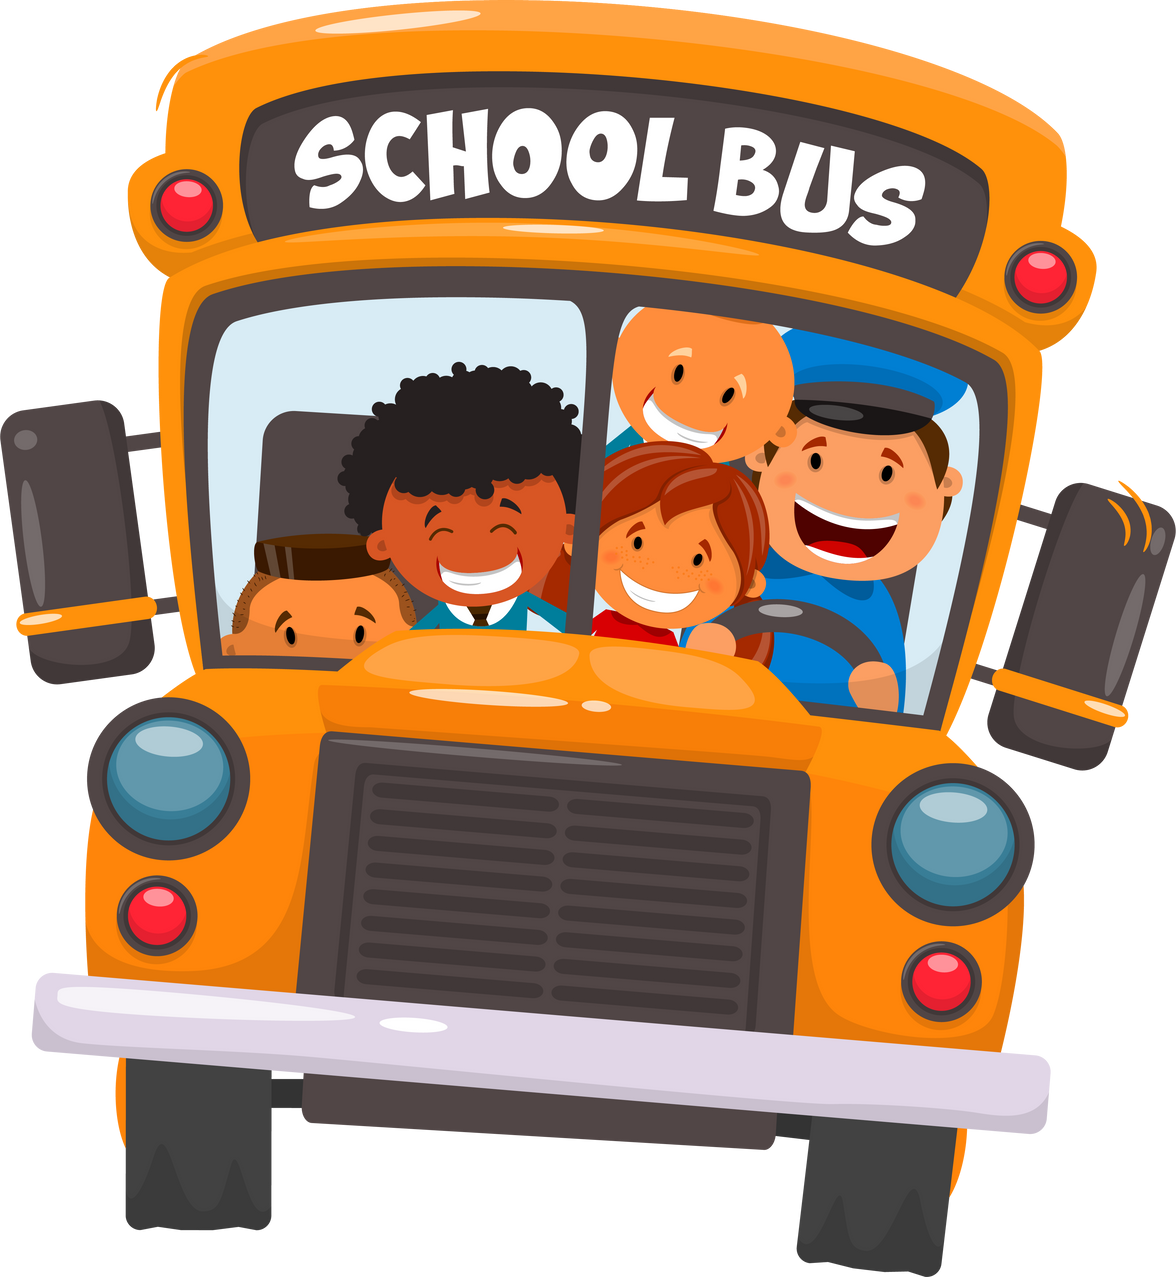 School bus with kids